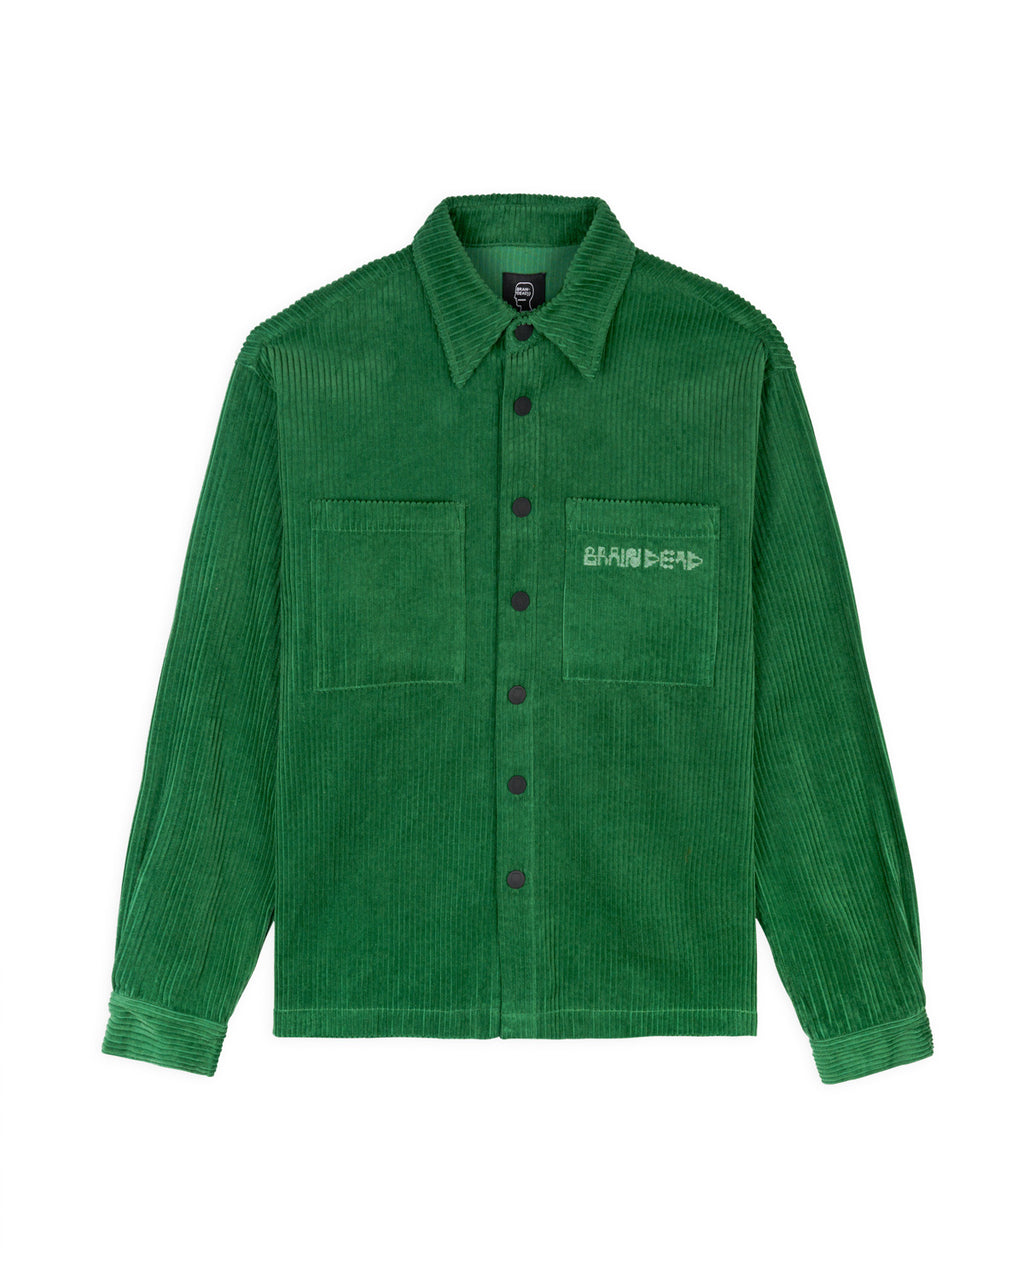 Trademark Wide Wale Snap Shirt - Green